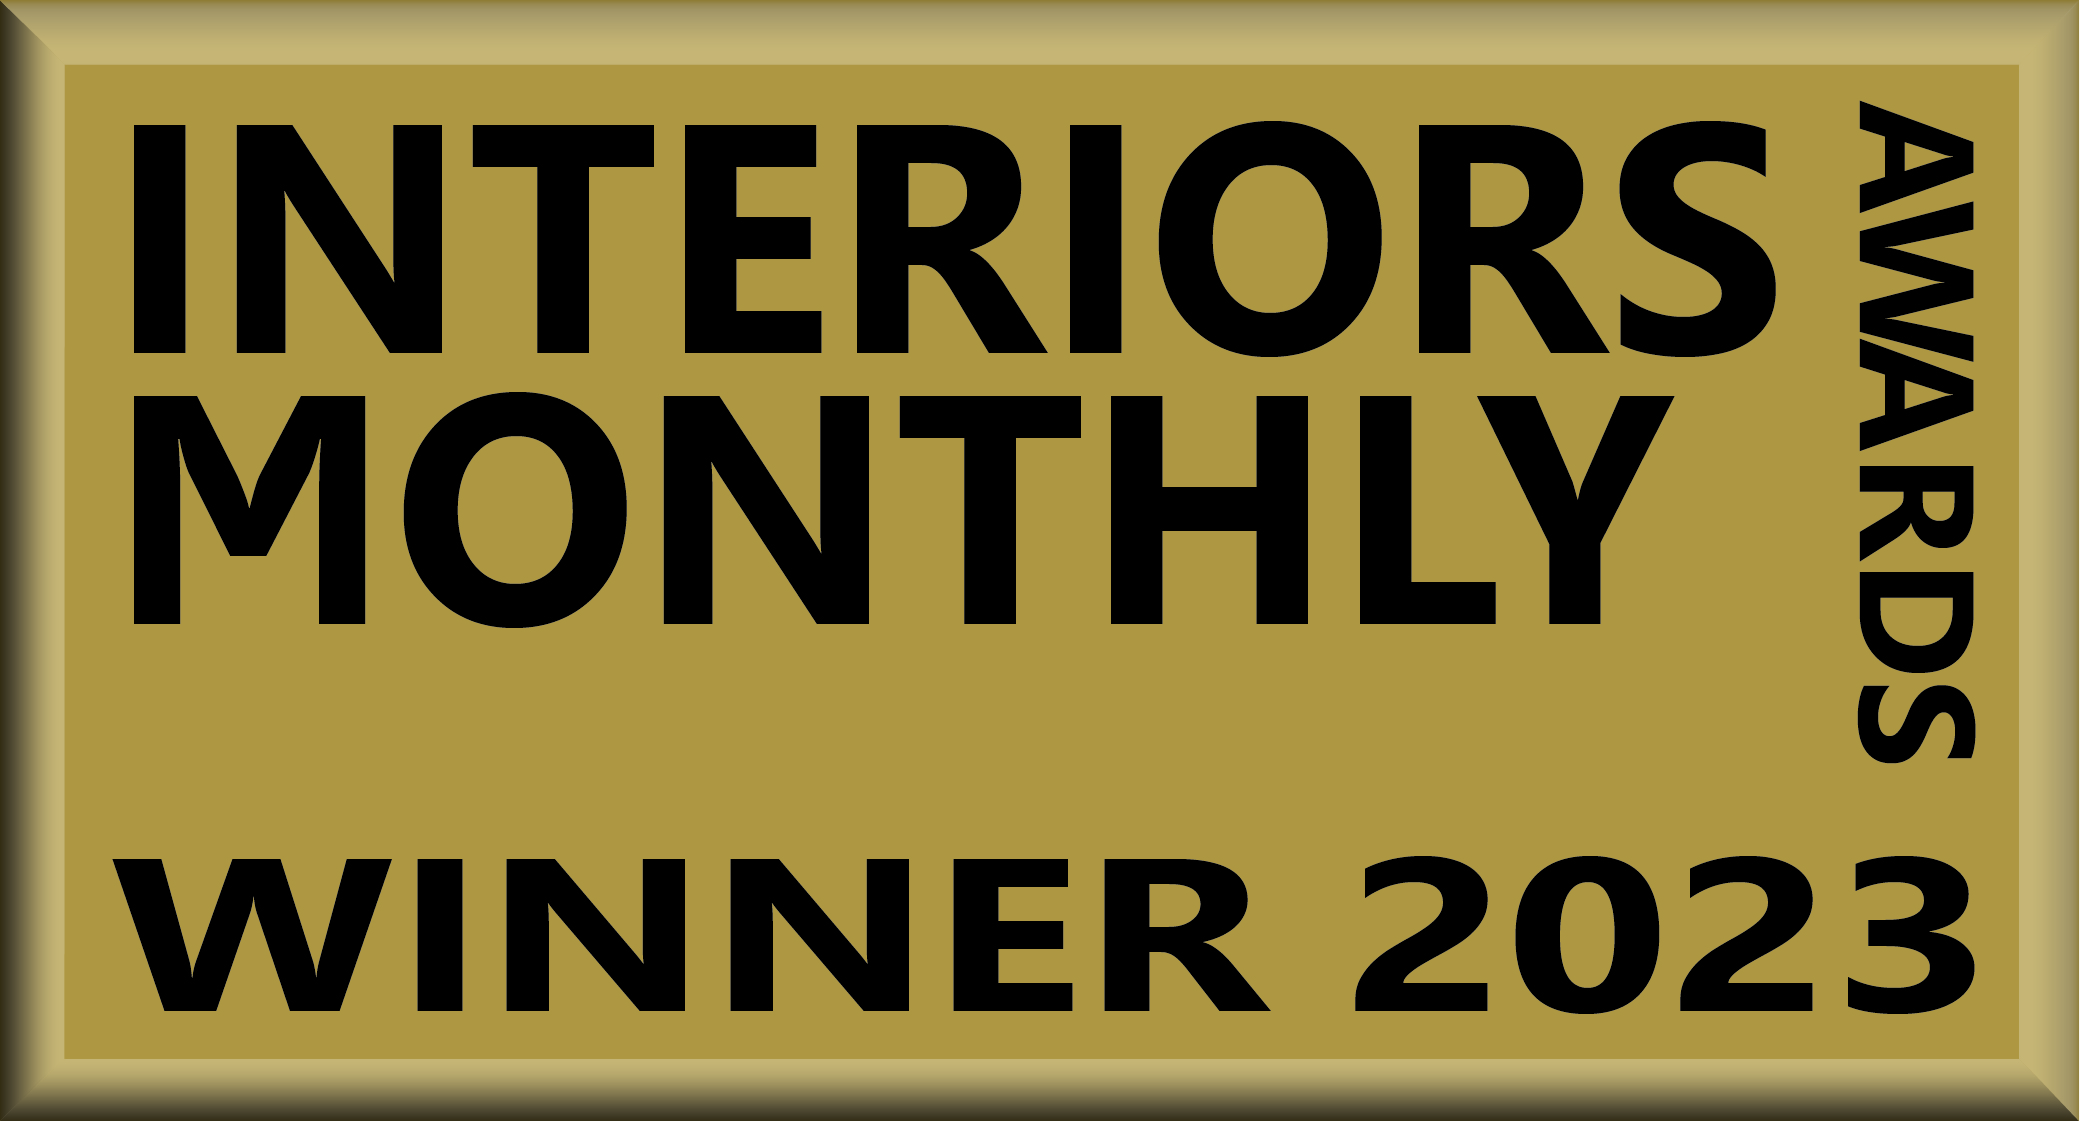 Interiors Monthly Winner 2023